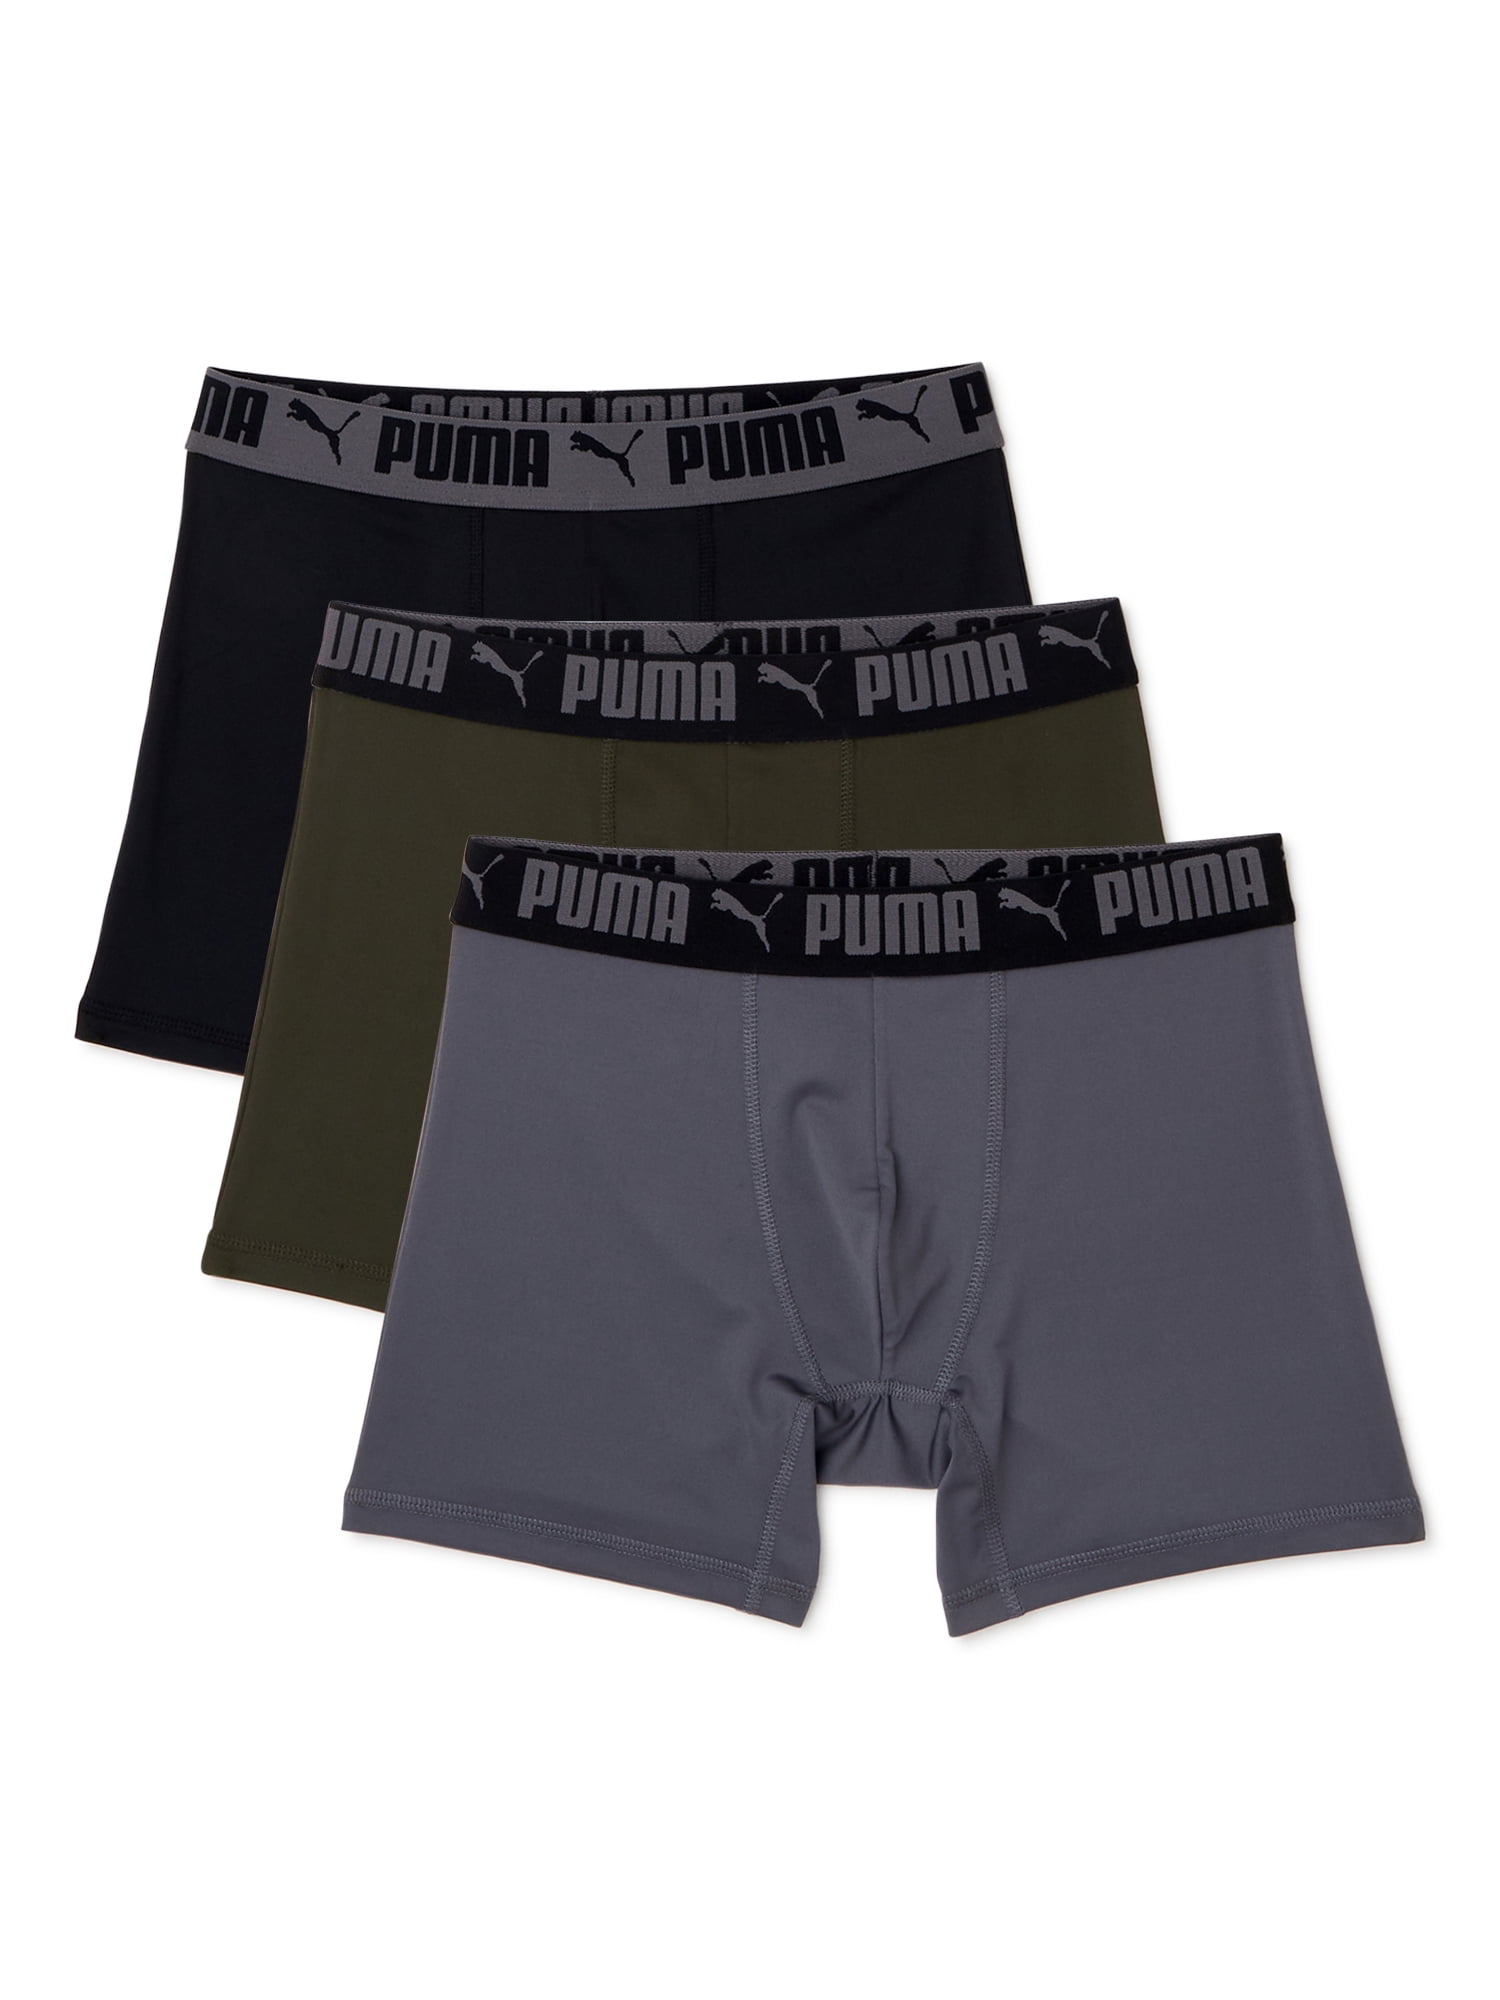 Puma Men's Boxer Briefs, 3-Pack 